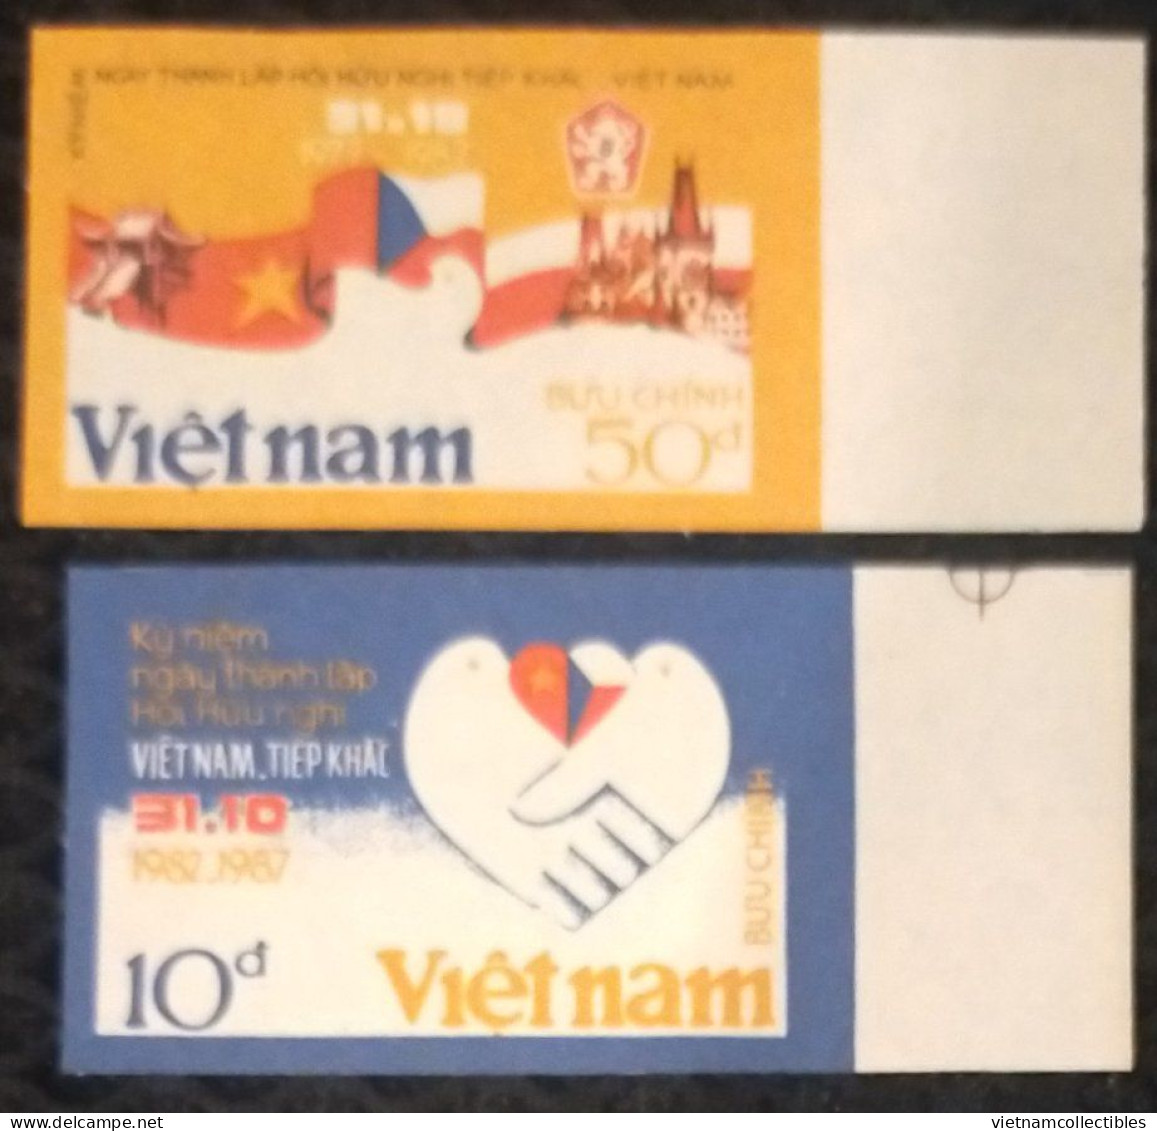 Vietnam MNH Imperf Stamps 1987 : 5th Anniversary Of Viet Nam Czechslovakian Friendship Treaty (Ms526) - Vietnam